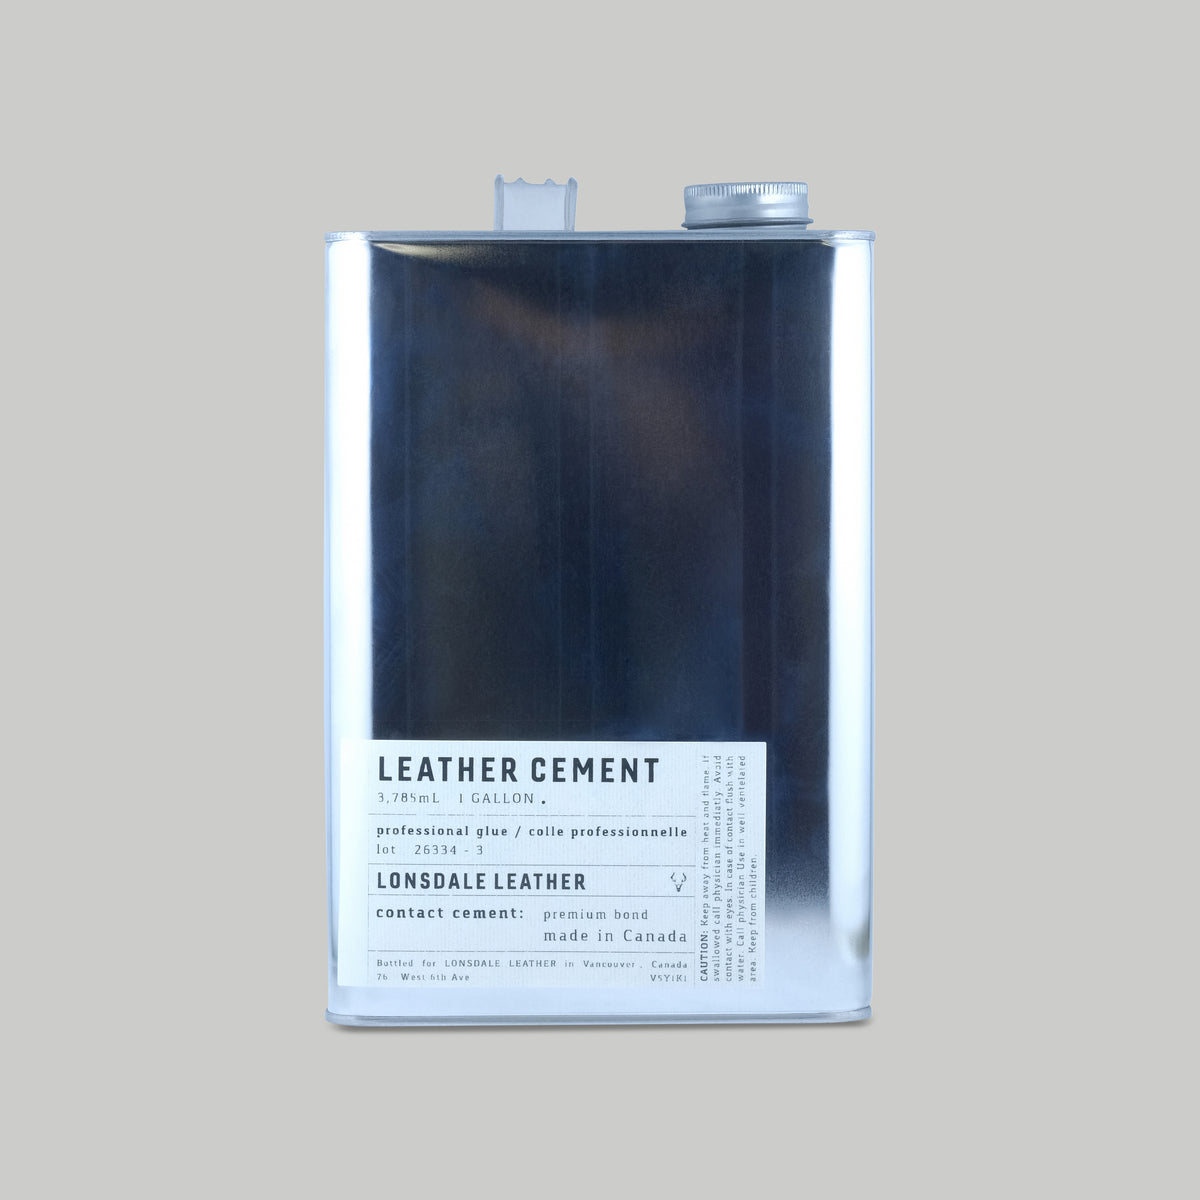 L.L. Contact Cement – Lonsdale Leather